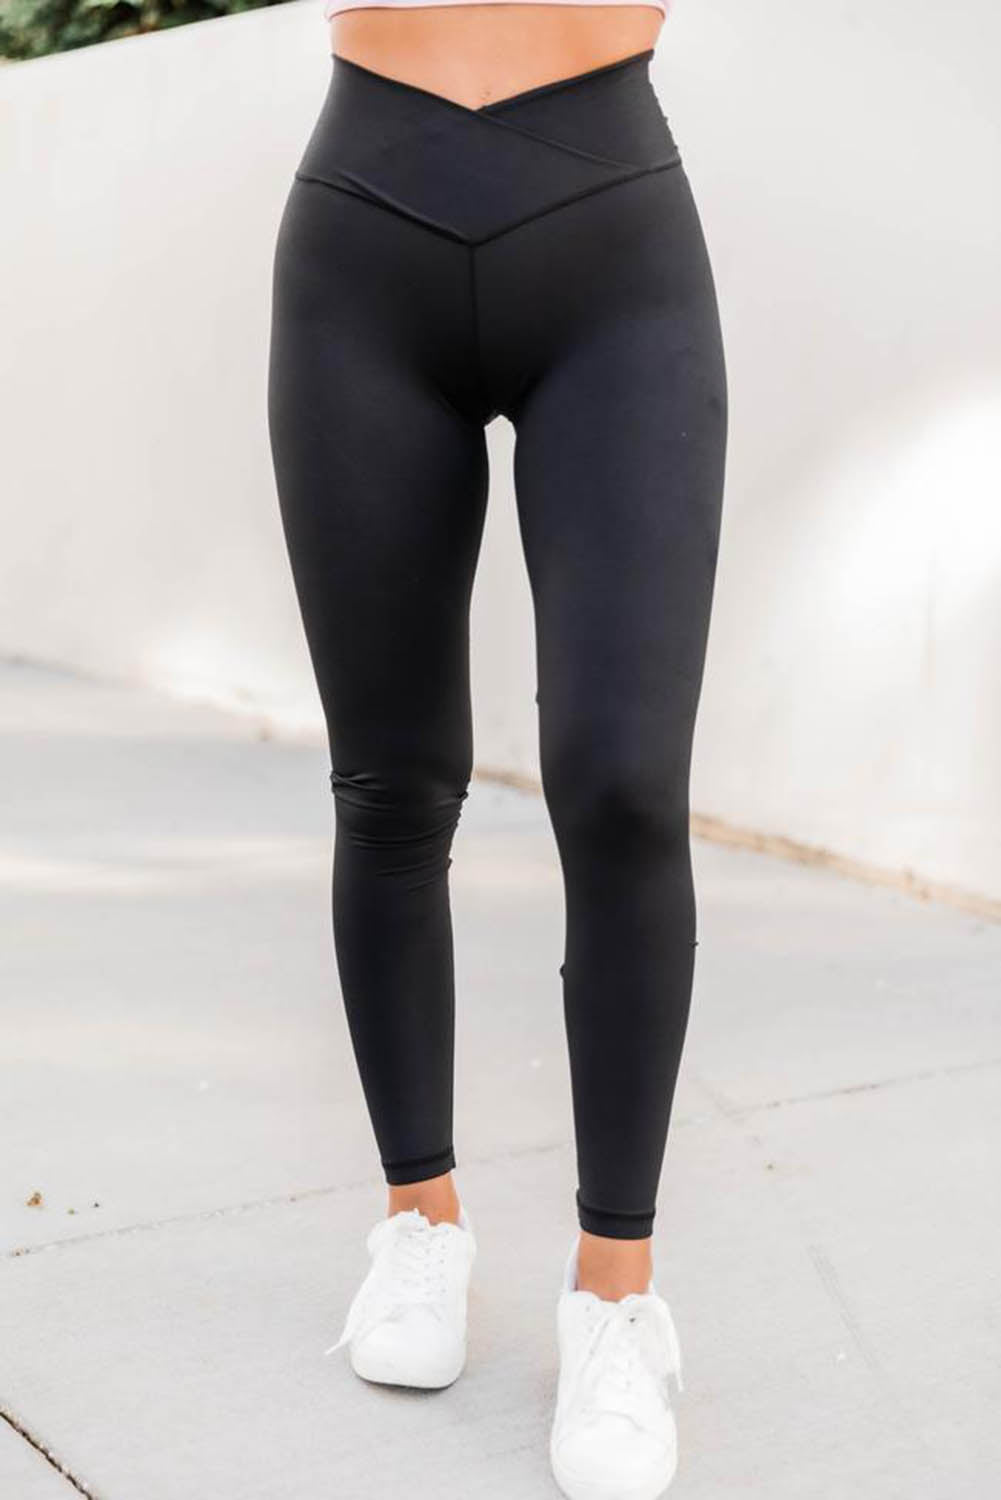 Womens - Pants-leggings - Hanahan Hawks - HANAHAN, South Carolina -  Sideline Store - BSN Sports